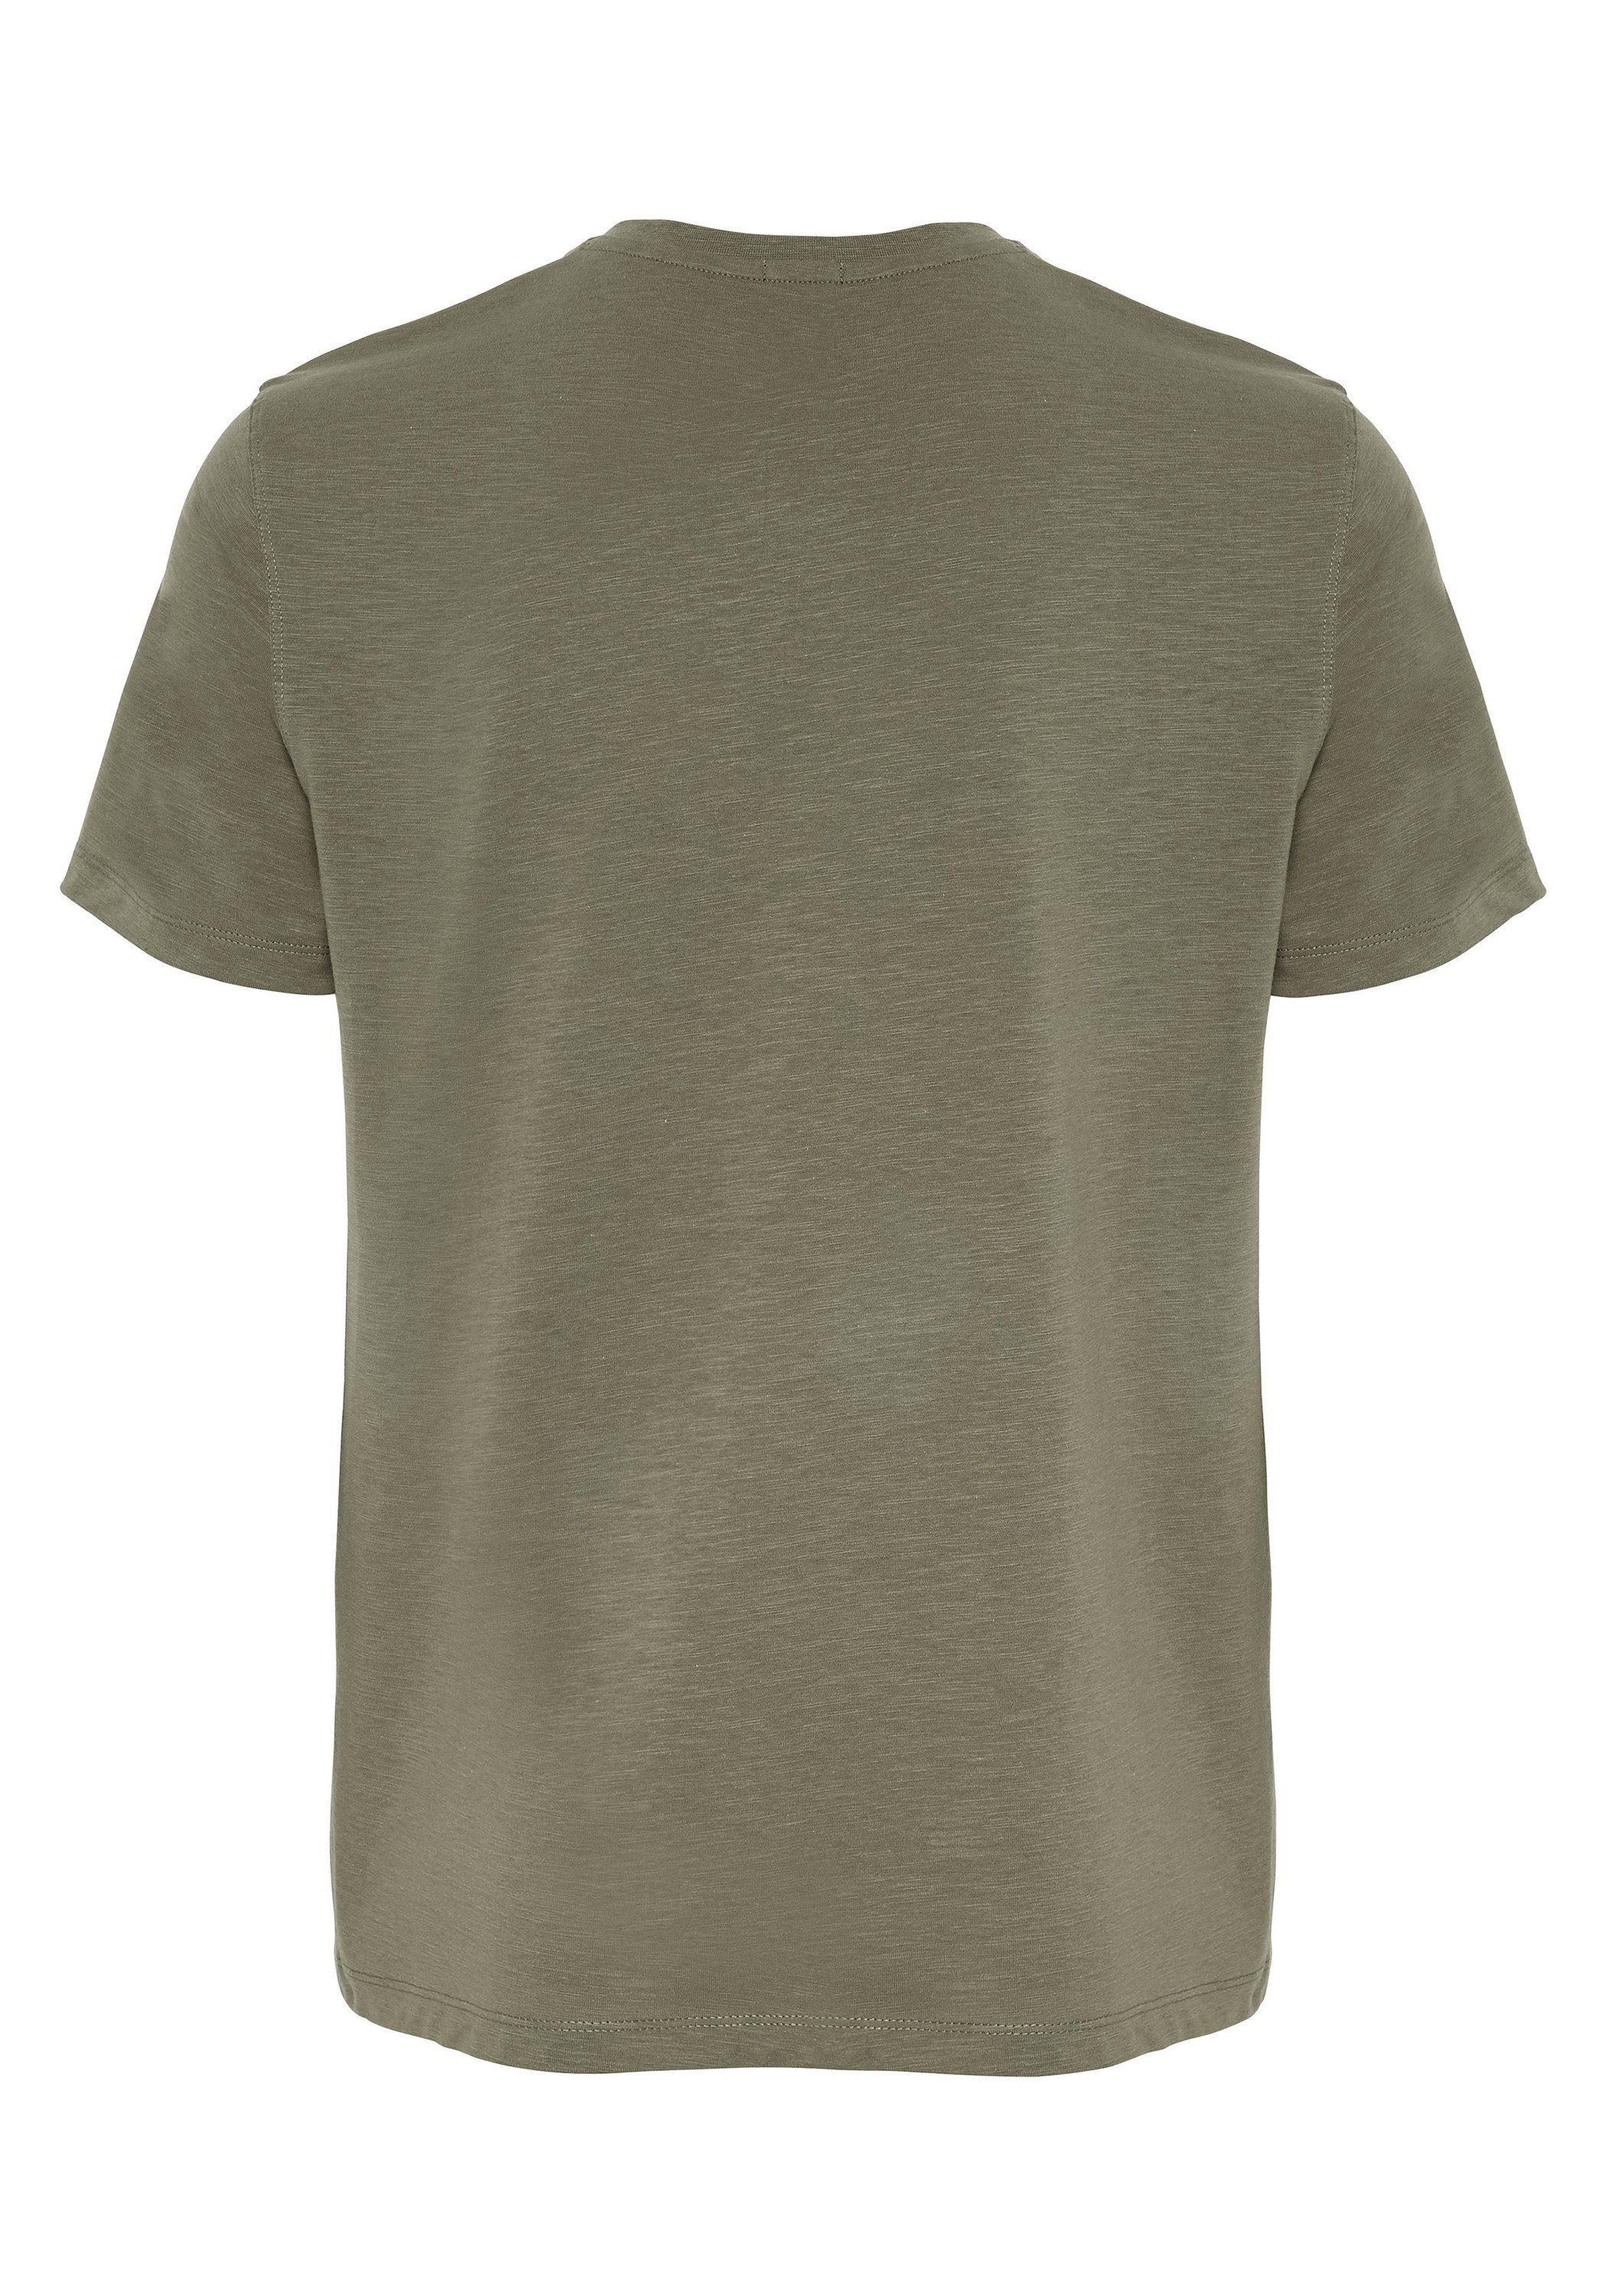 Label-Symbol mit 1 Dusty Chiemsee T-Shirt Olive Print-Shirt gedrucktem